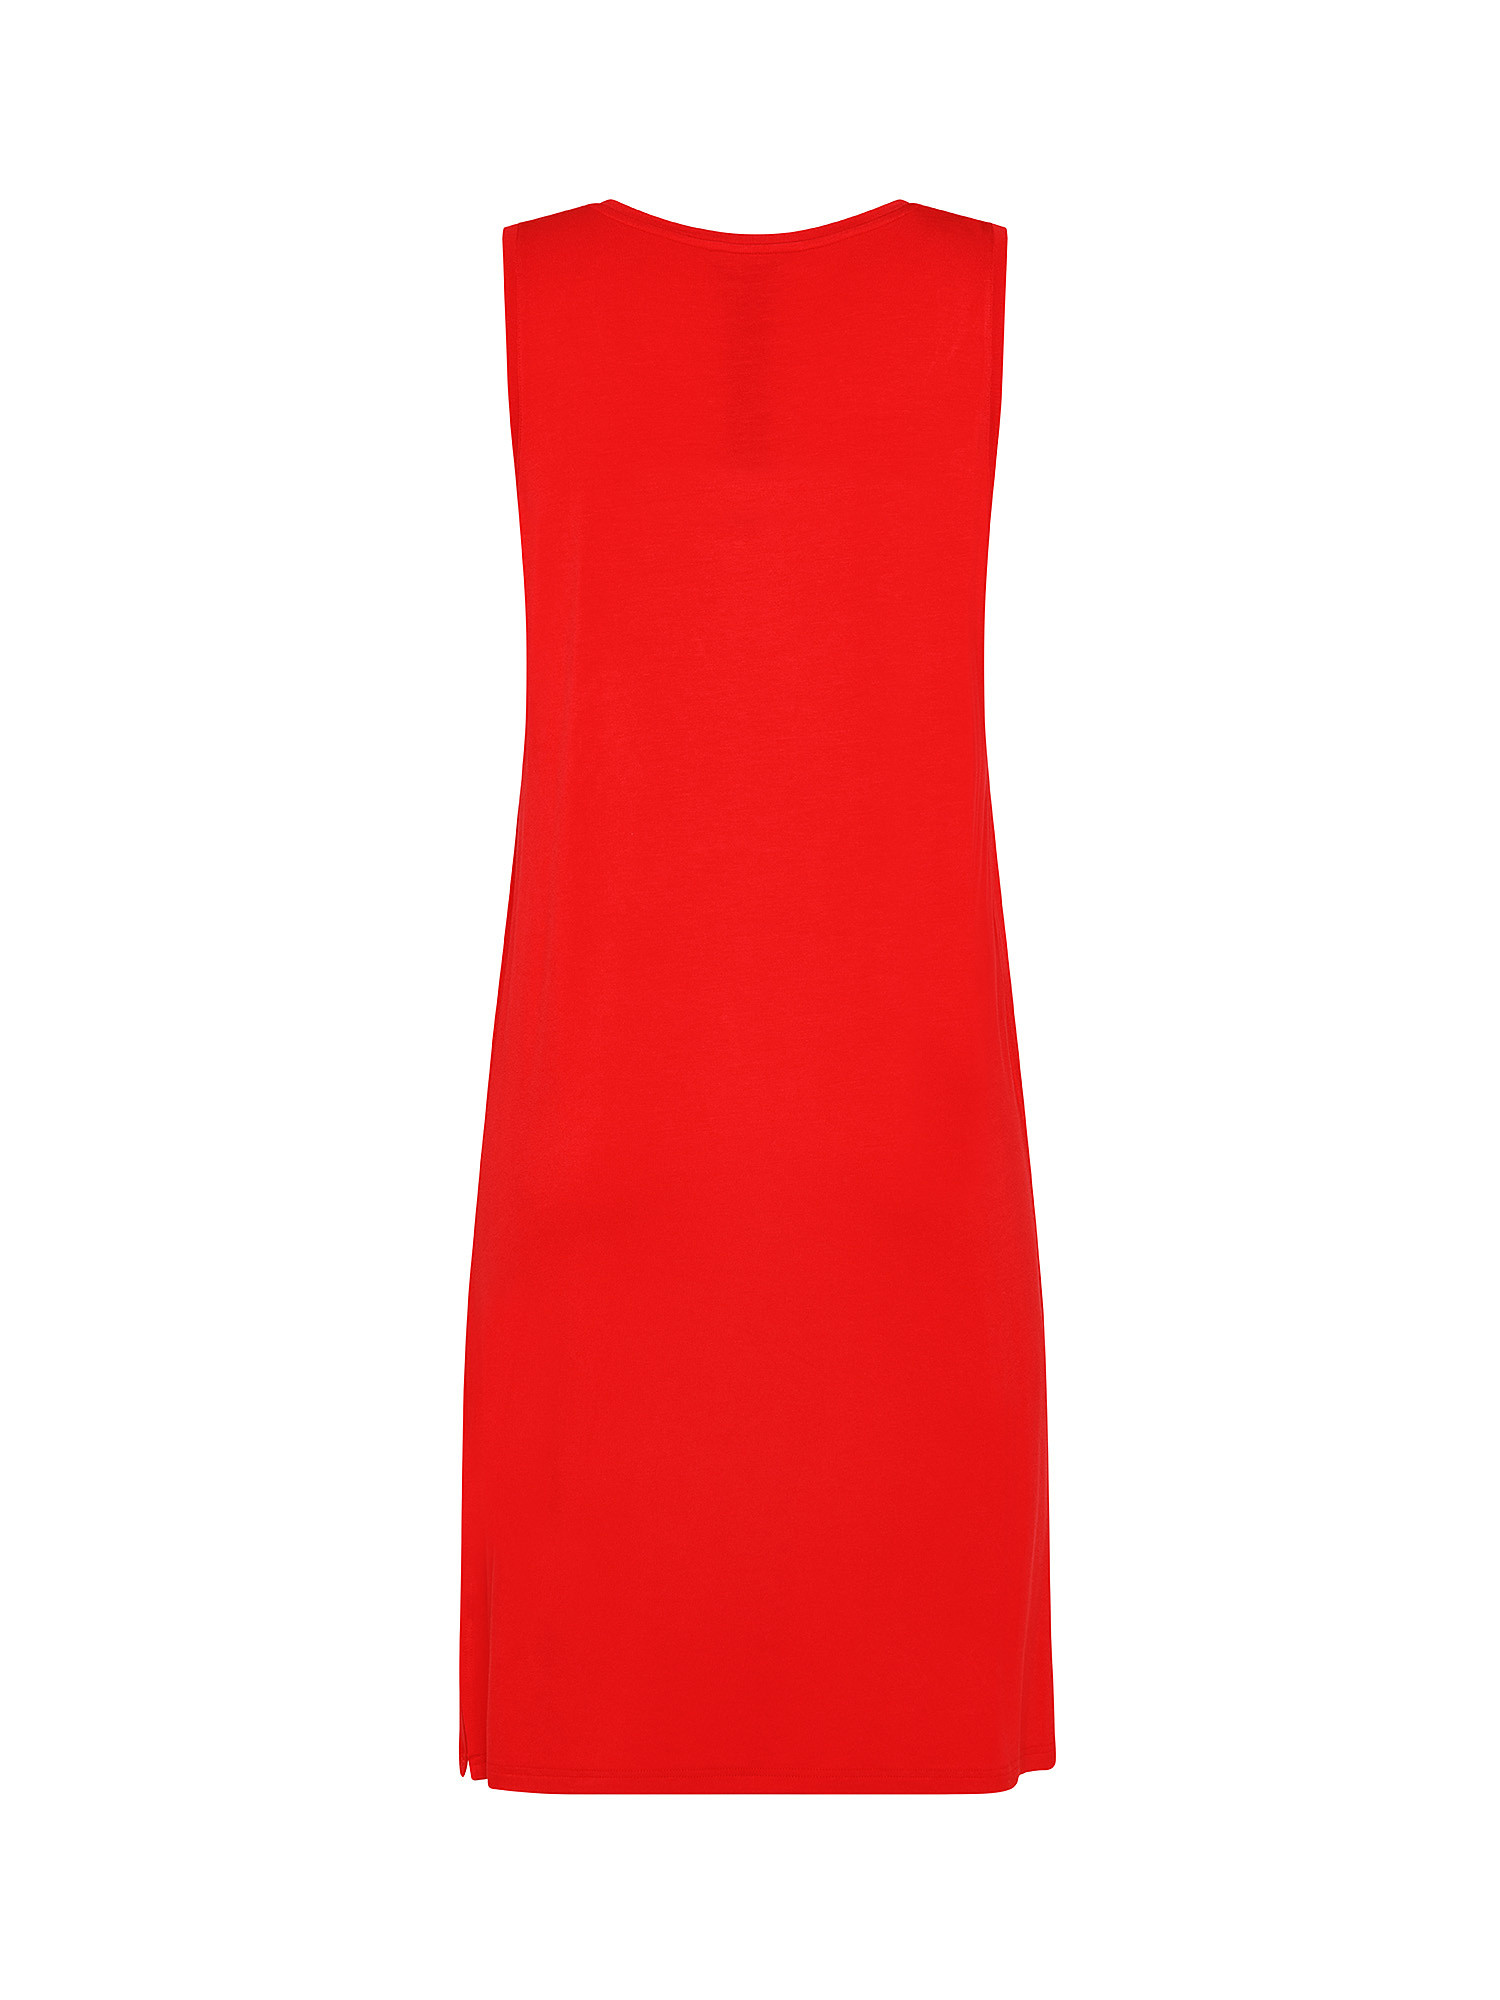 Short dress with logo, Red, large image number 1